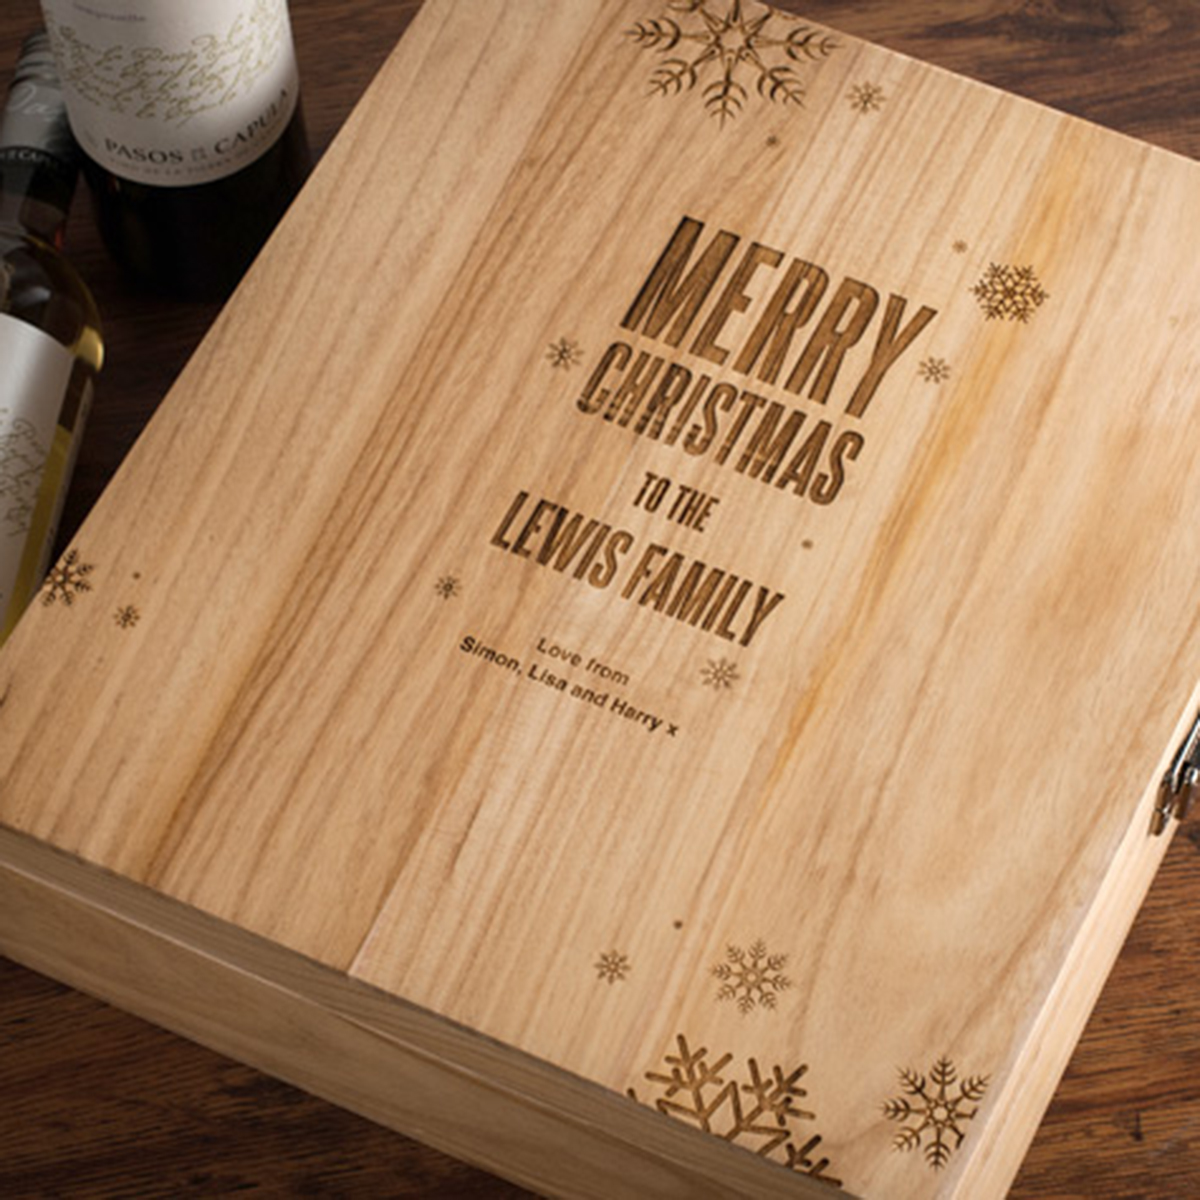 Personalised 3 Bottle Luxury Wooden Wine Box - Festive Snowflakes